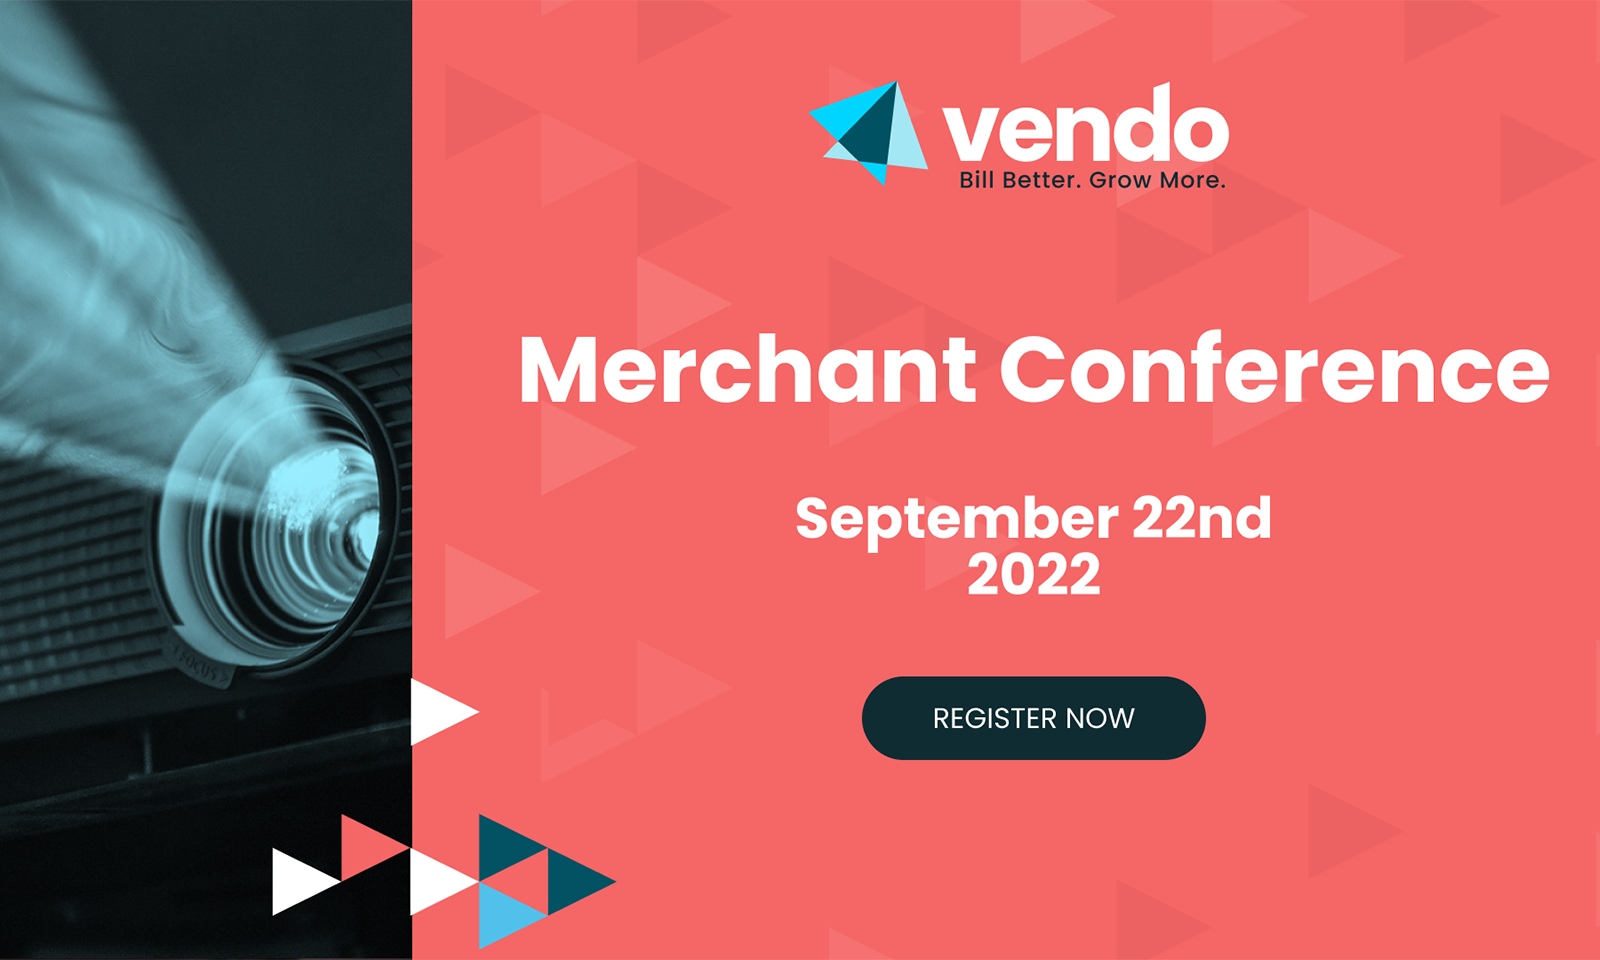 Vendo Merchant Conference Set for September 22